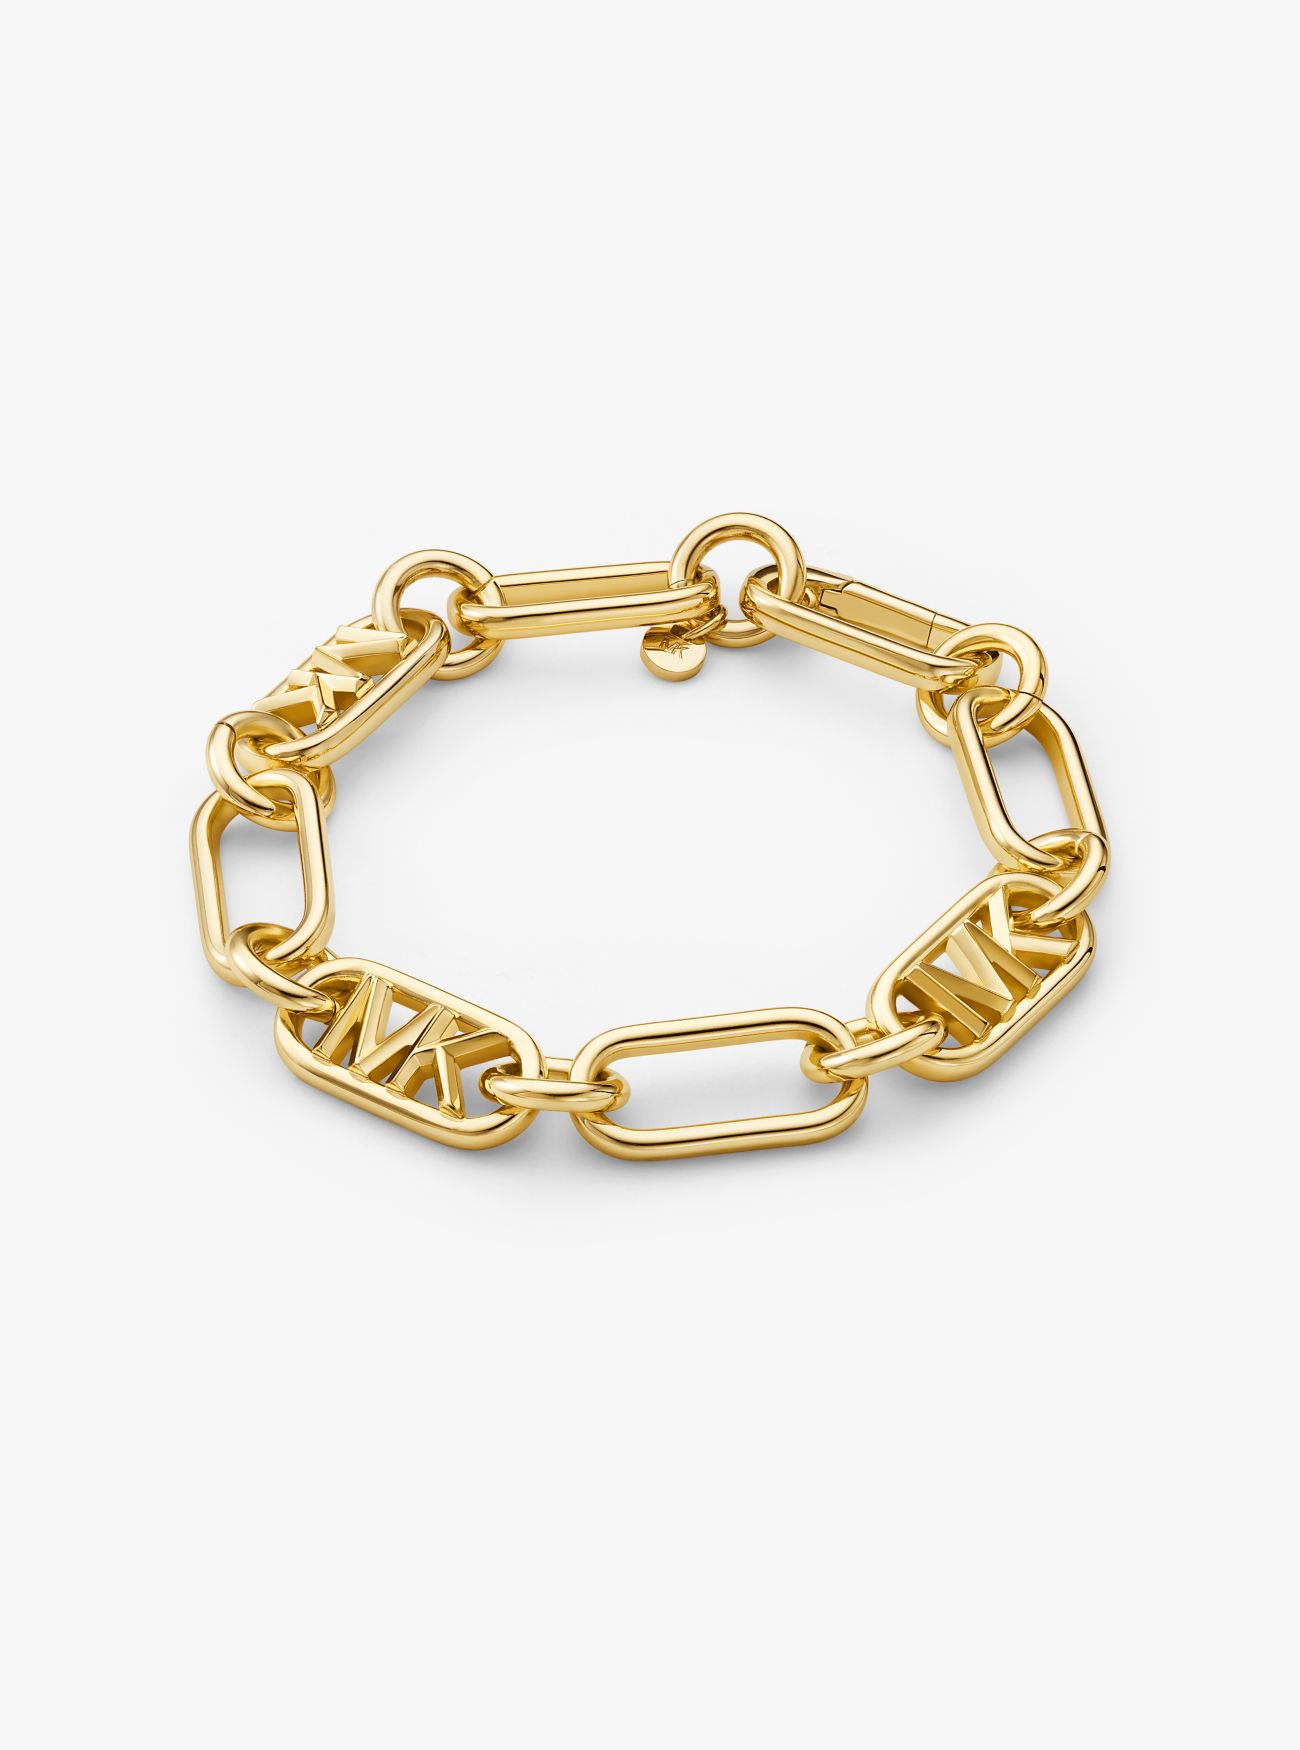 MK Precious Metal-Plated Brass Chain Link Bracelet - Gold - Michael Kors